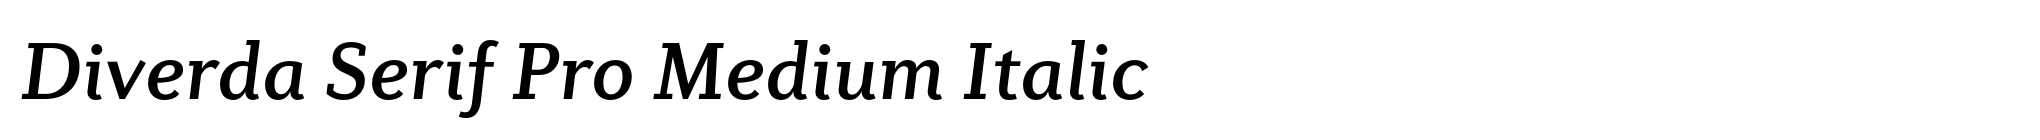 Diverda Serif Pro Medium Italic image